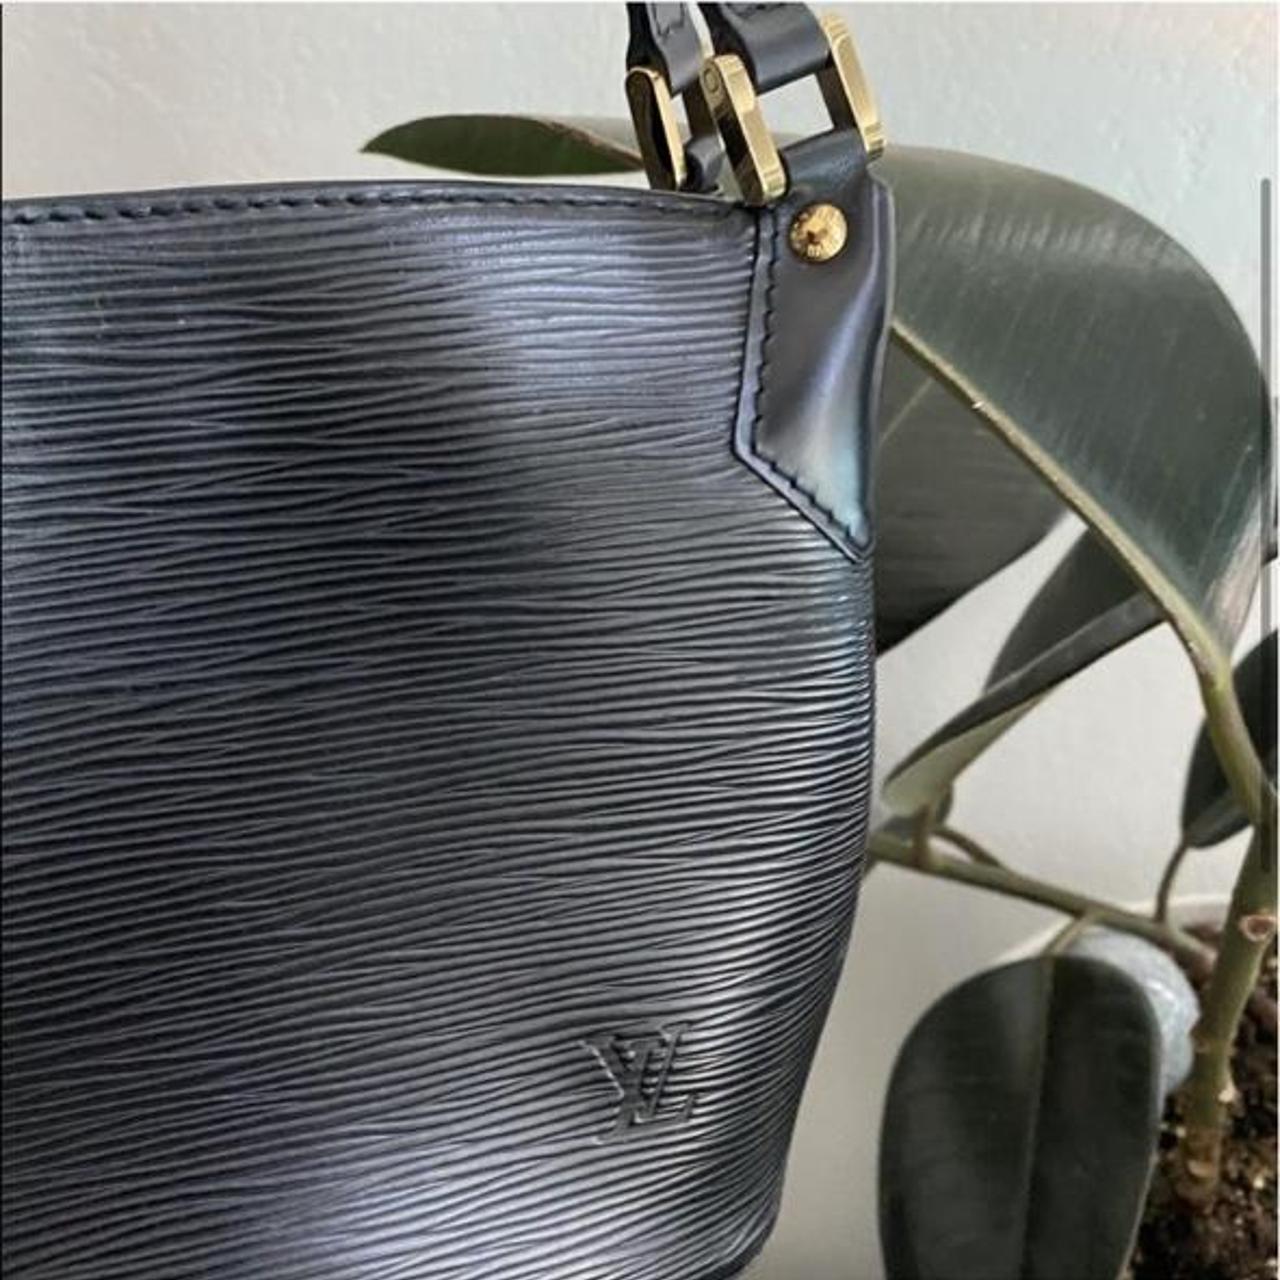 Louis Vuitton Manhattan Handbag Monogram - Depop